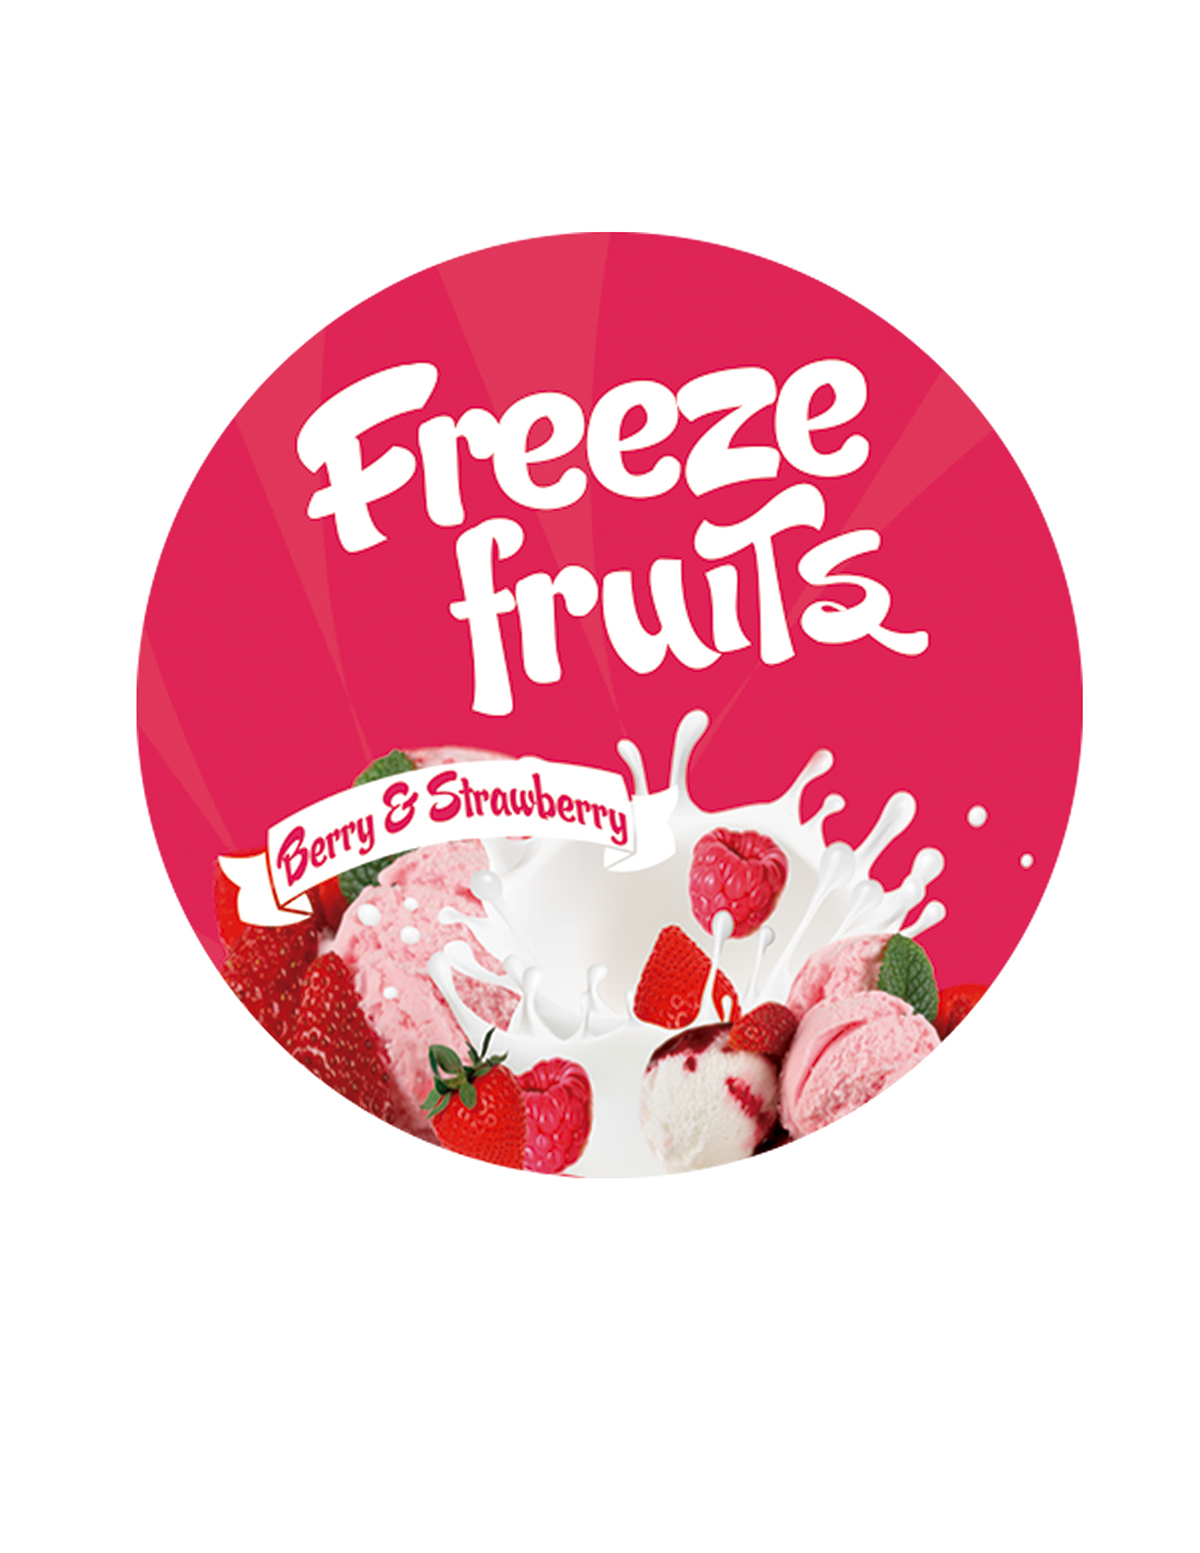 ice cream fresa strawberry frambuesa berries ice milk red berry helado leche yogurt frutas